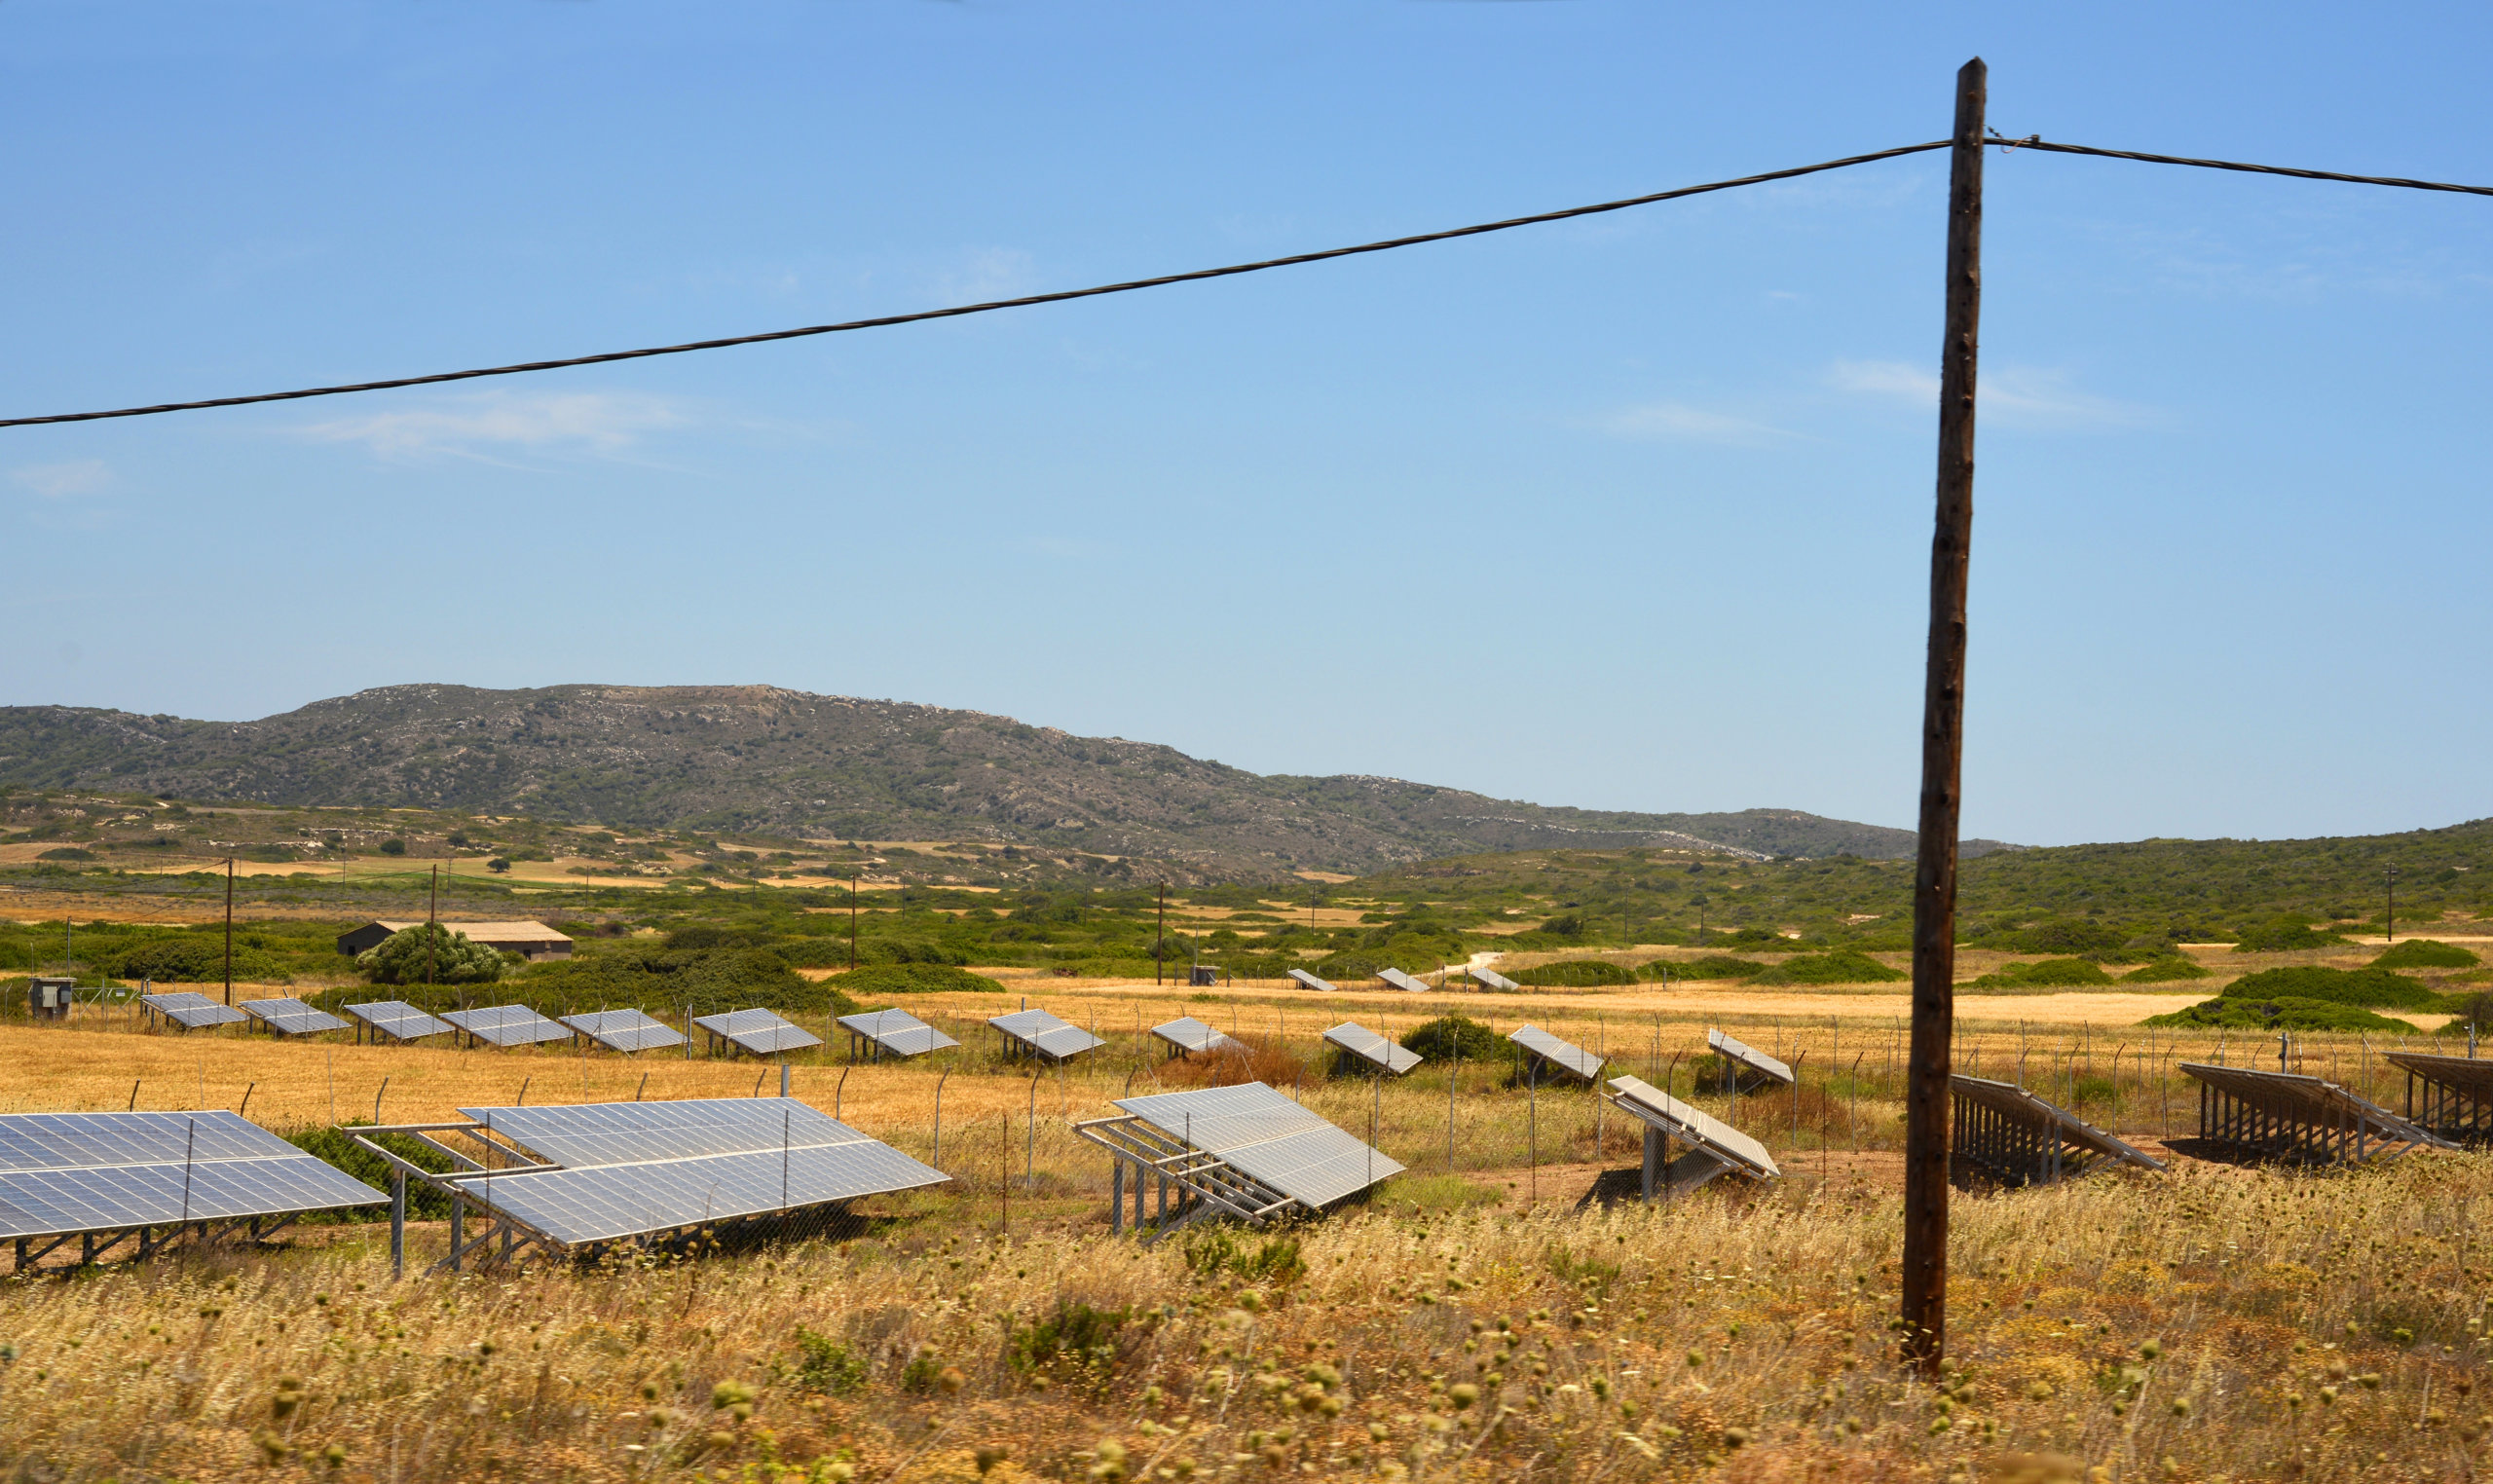 NM regulators deny request to delay implementation of community solar program pending court appeal